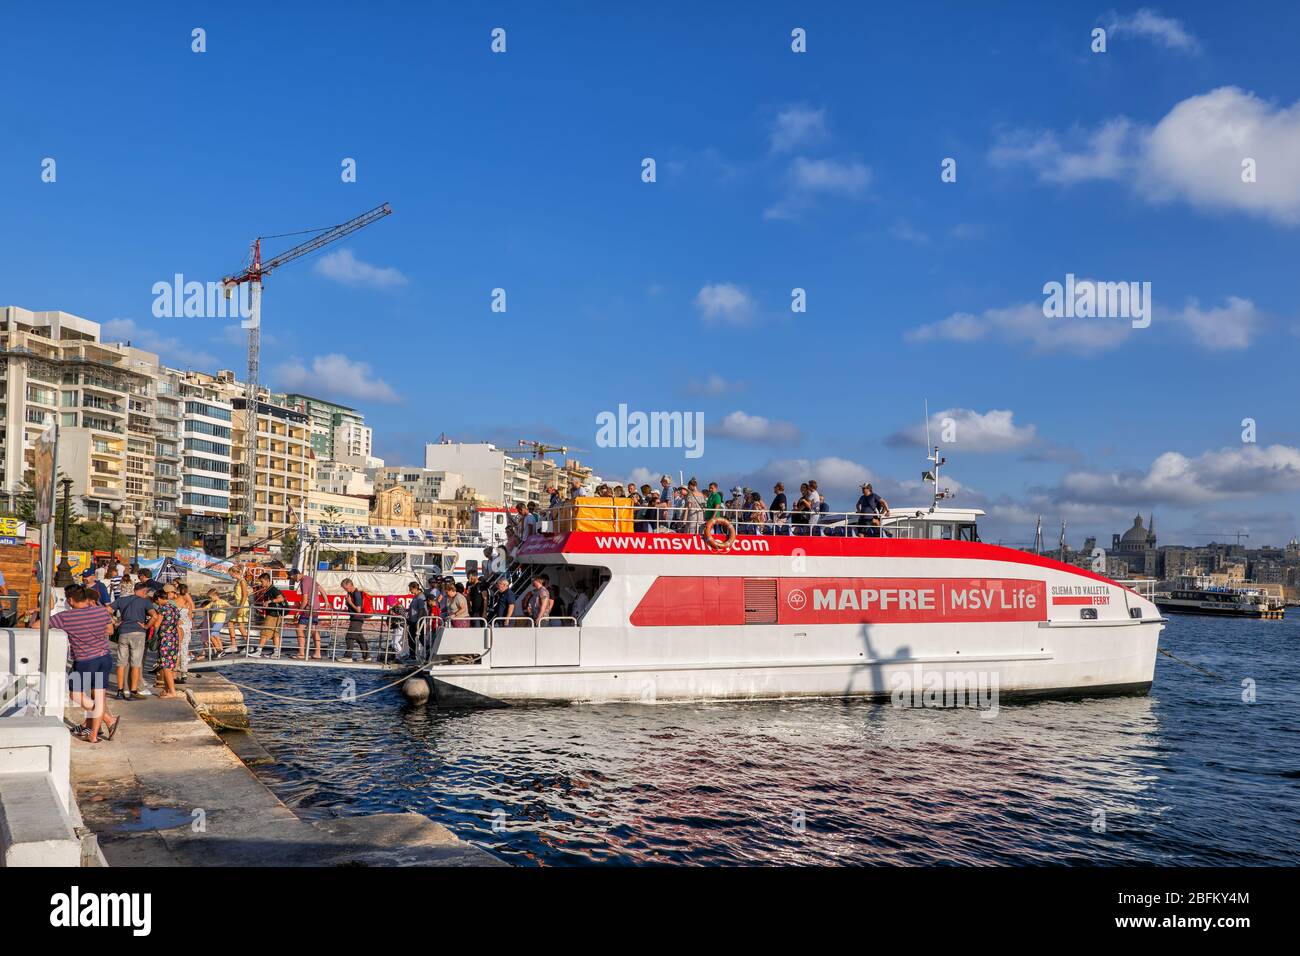 Valletta, Malta - October 13, 2019: Group of people leaving Ferry boat at Sliema town waterfront, public transport in Marsamxett Harbour between Sliem Stock Photo